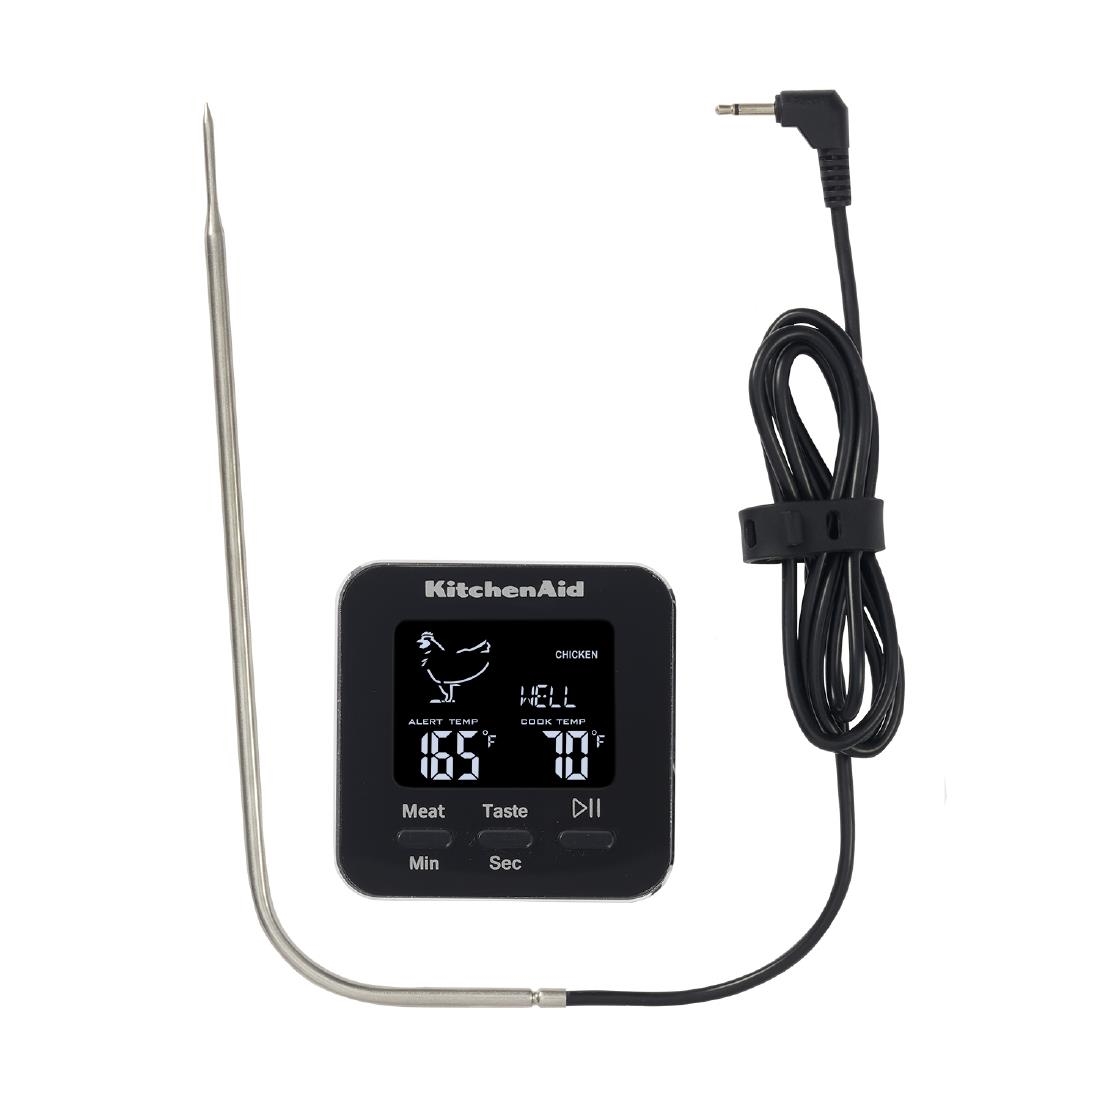 Hygiplas Water Resistant Digital Probe Thermometer - GH628 - Buy